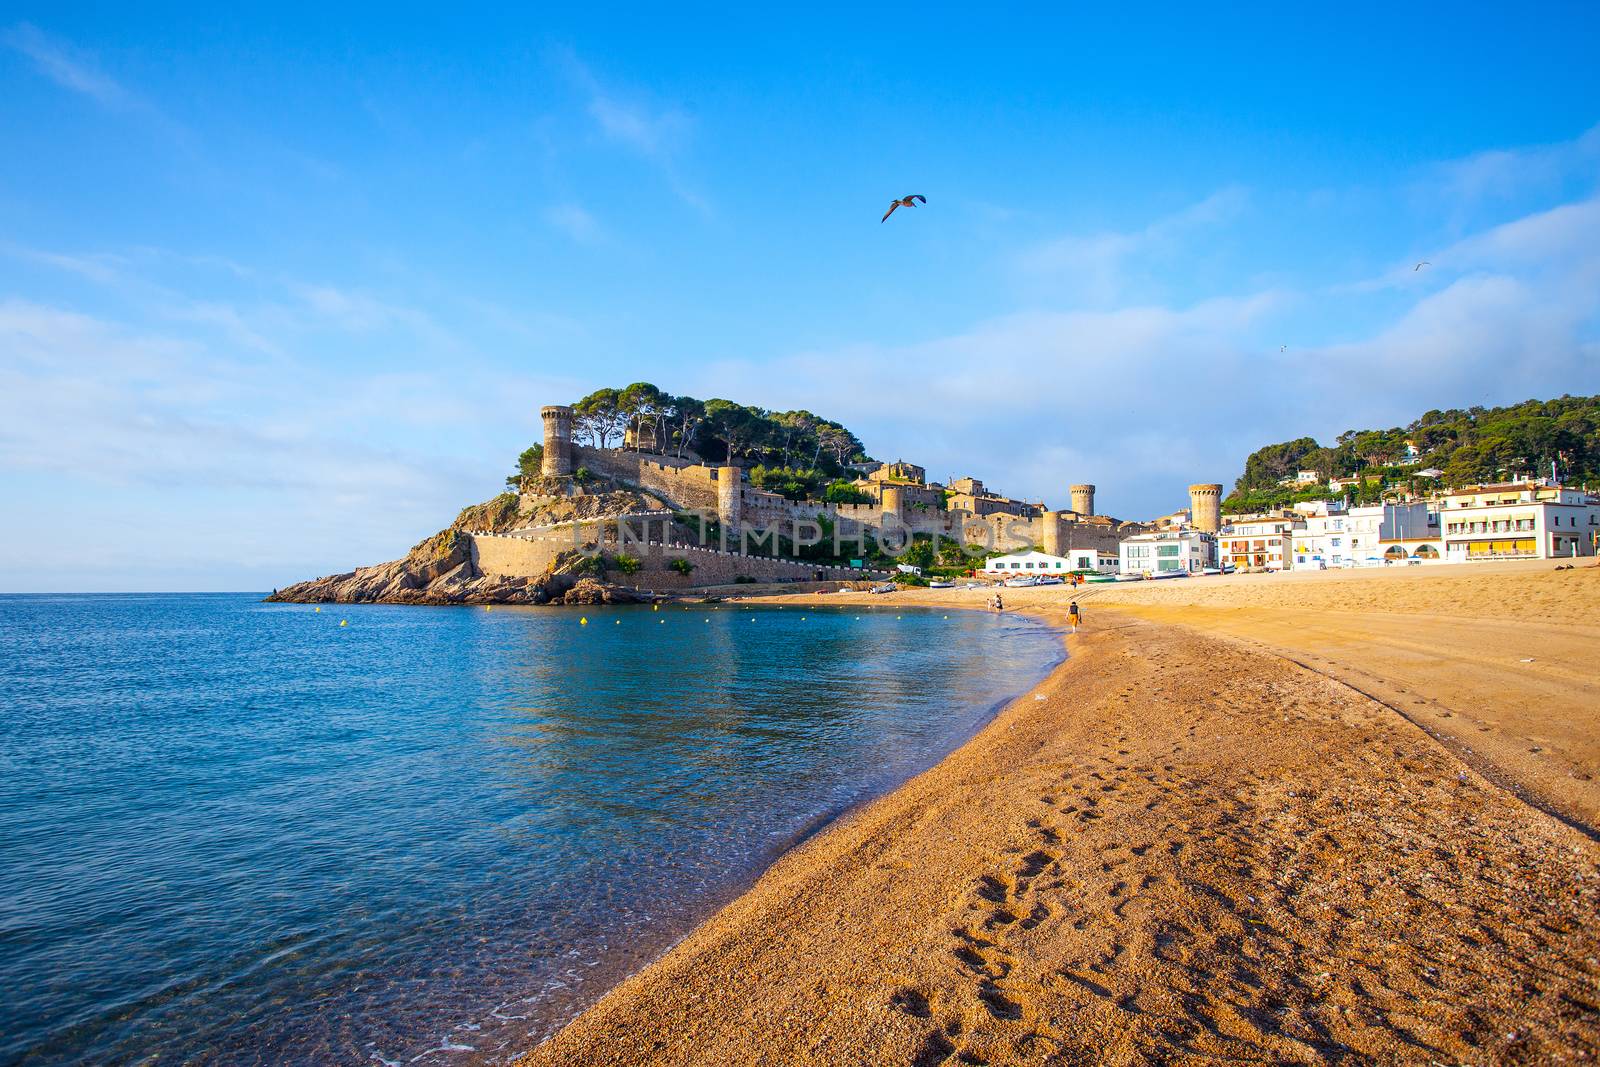 Tossa de Mar, Catalonia, Spain, 2013.06.23, landscape with coastline, editorial use only